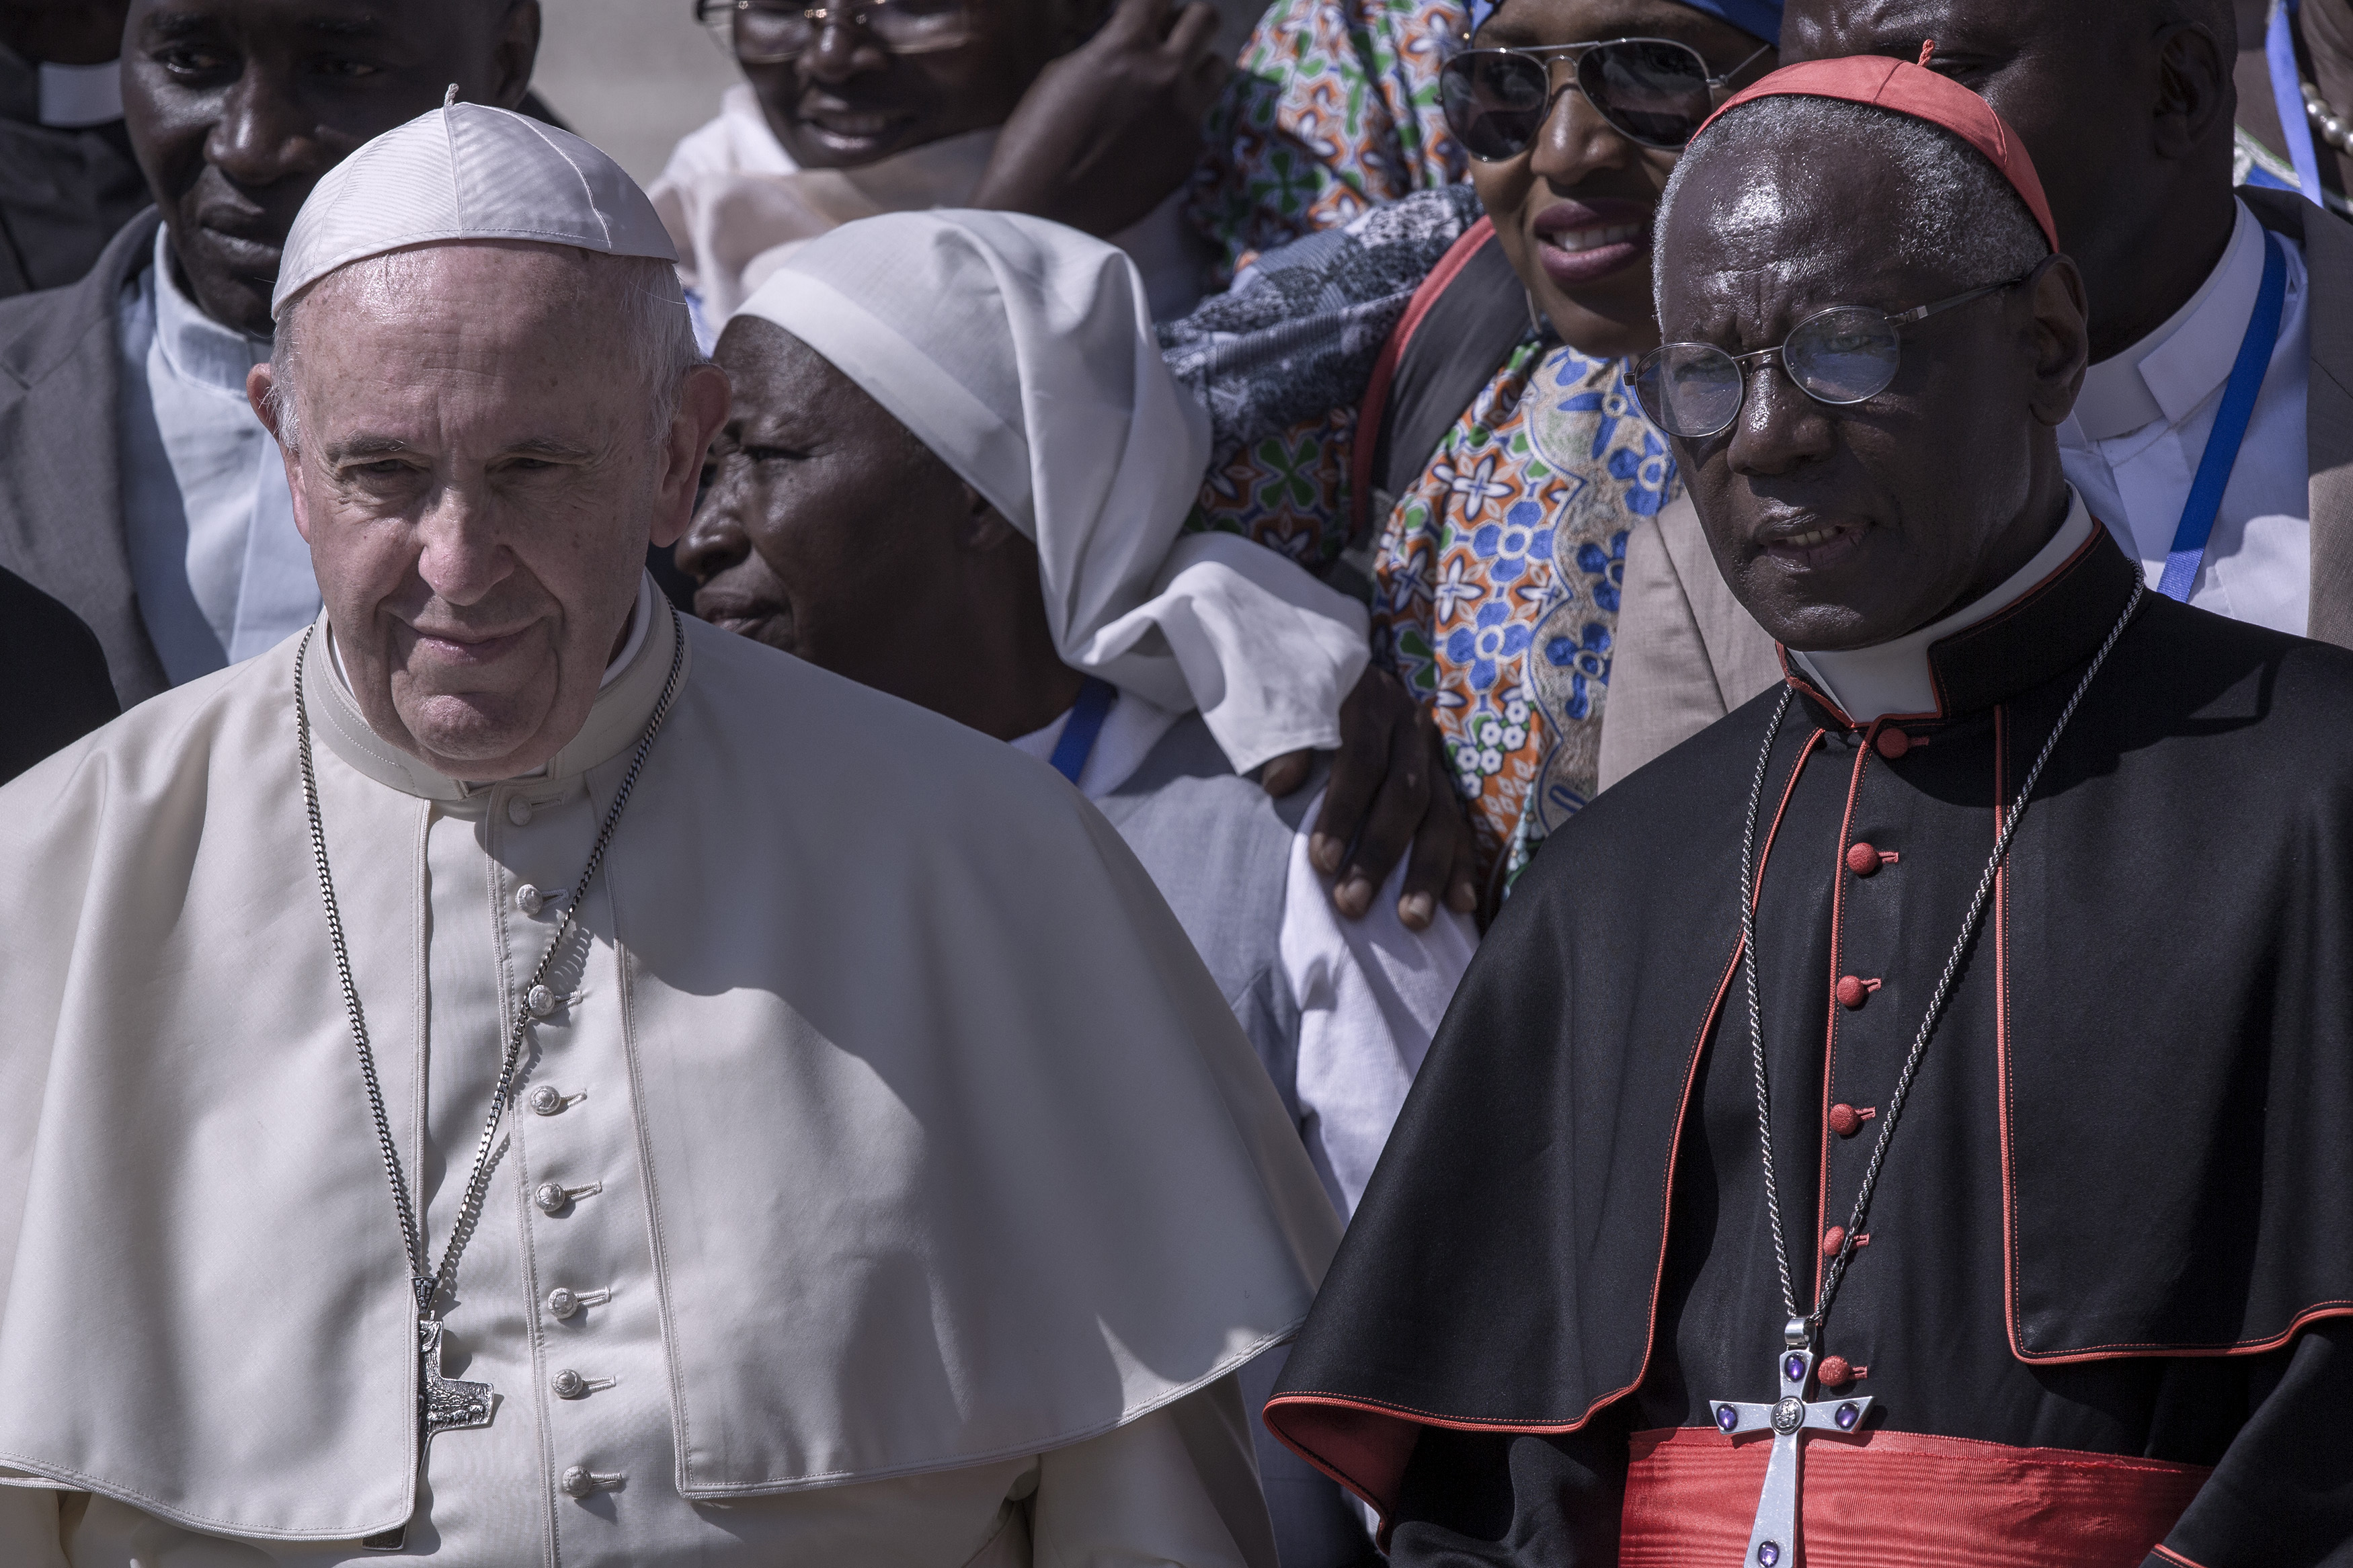 Cardinal Sarah steps down from Vatican liturgy post